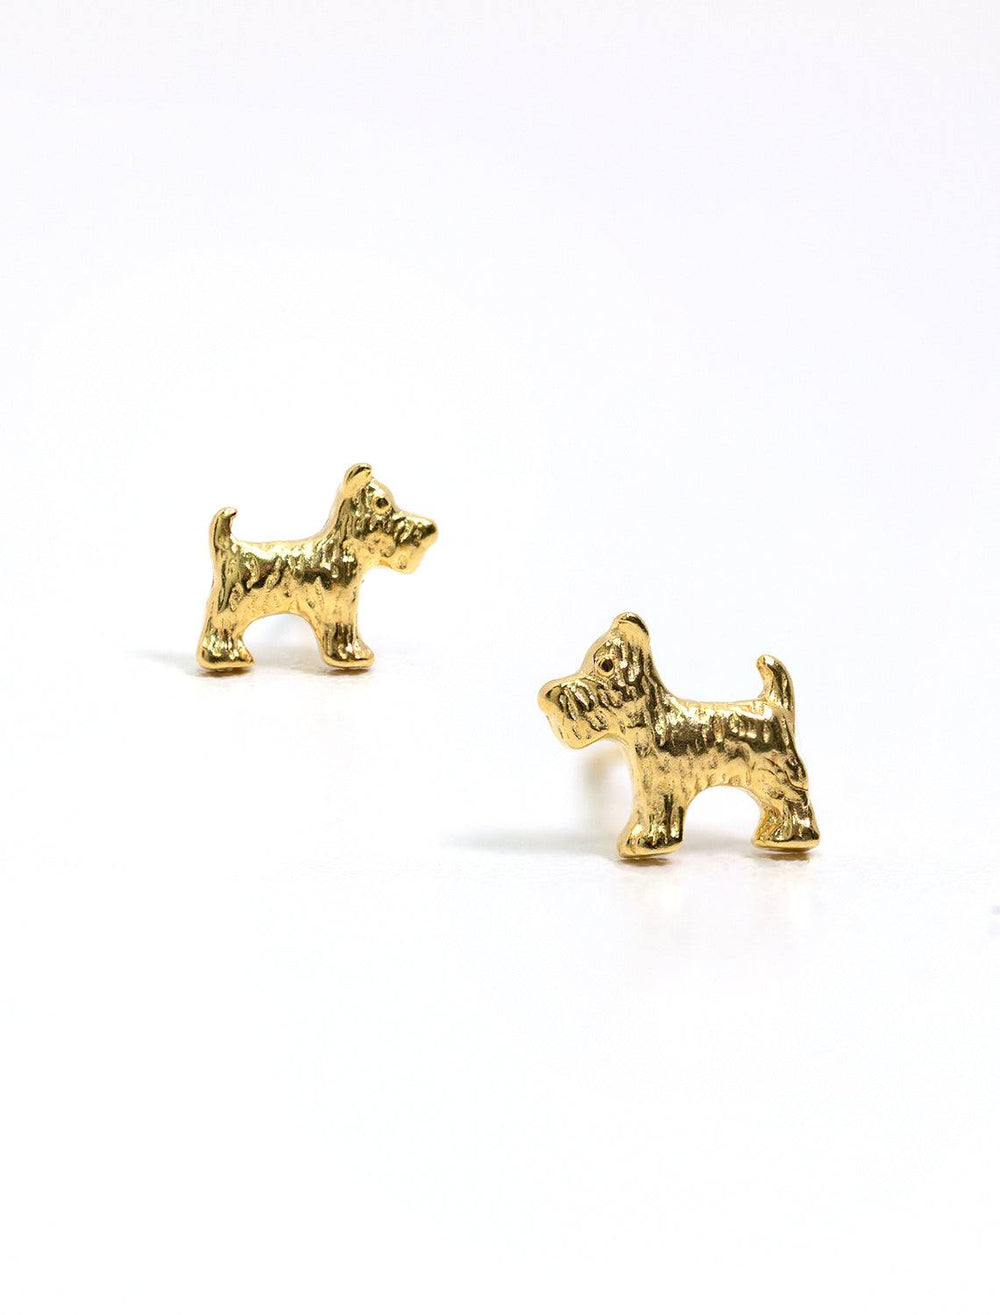 Tai jewelry's westie dog posts in gold.